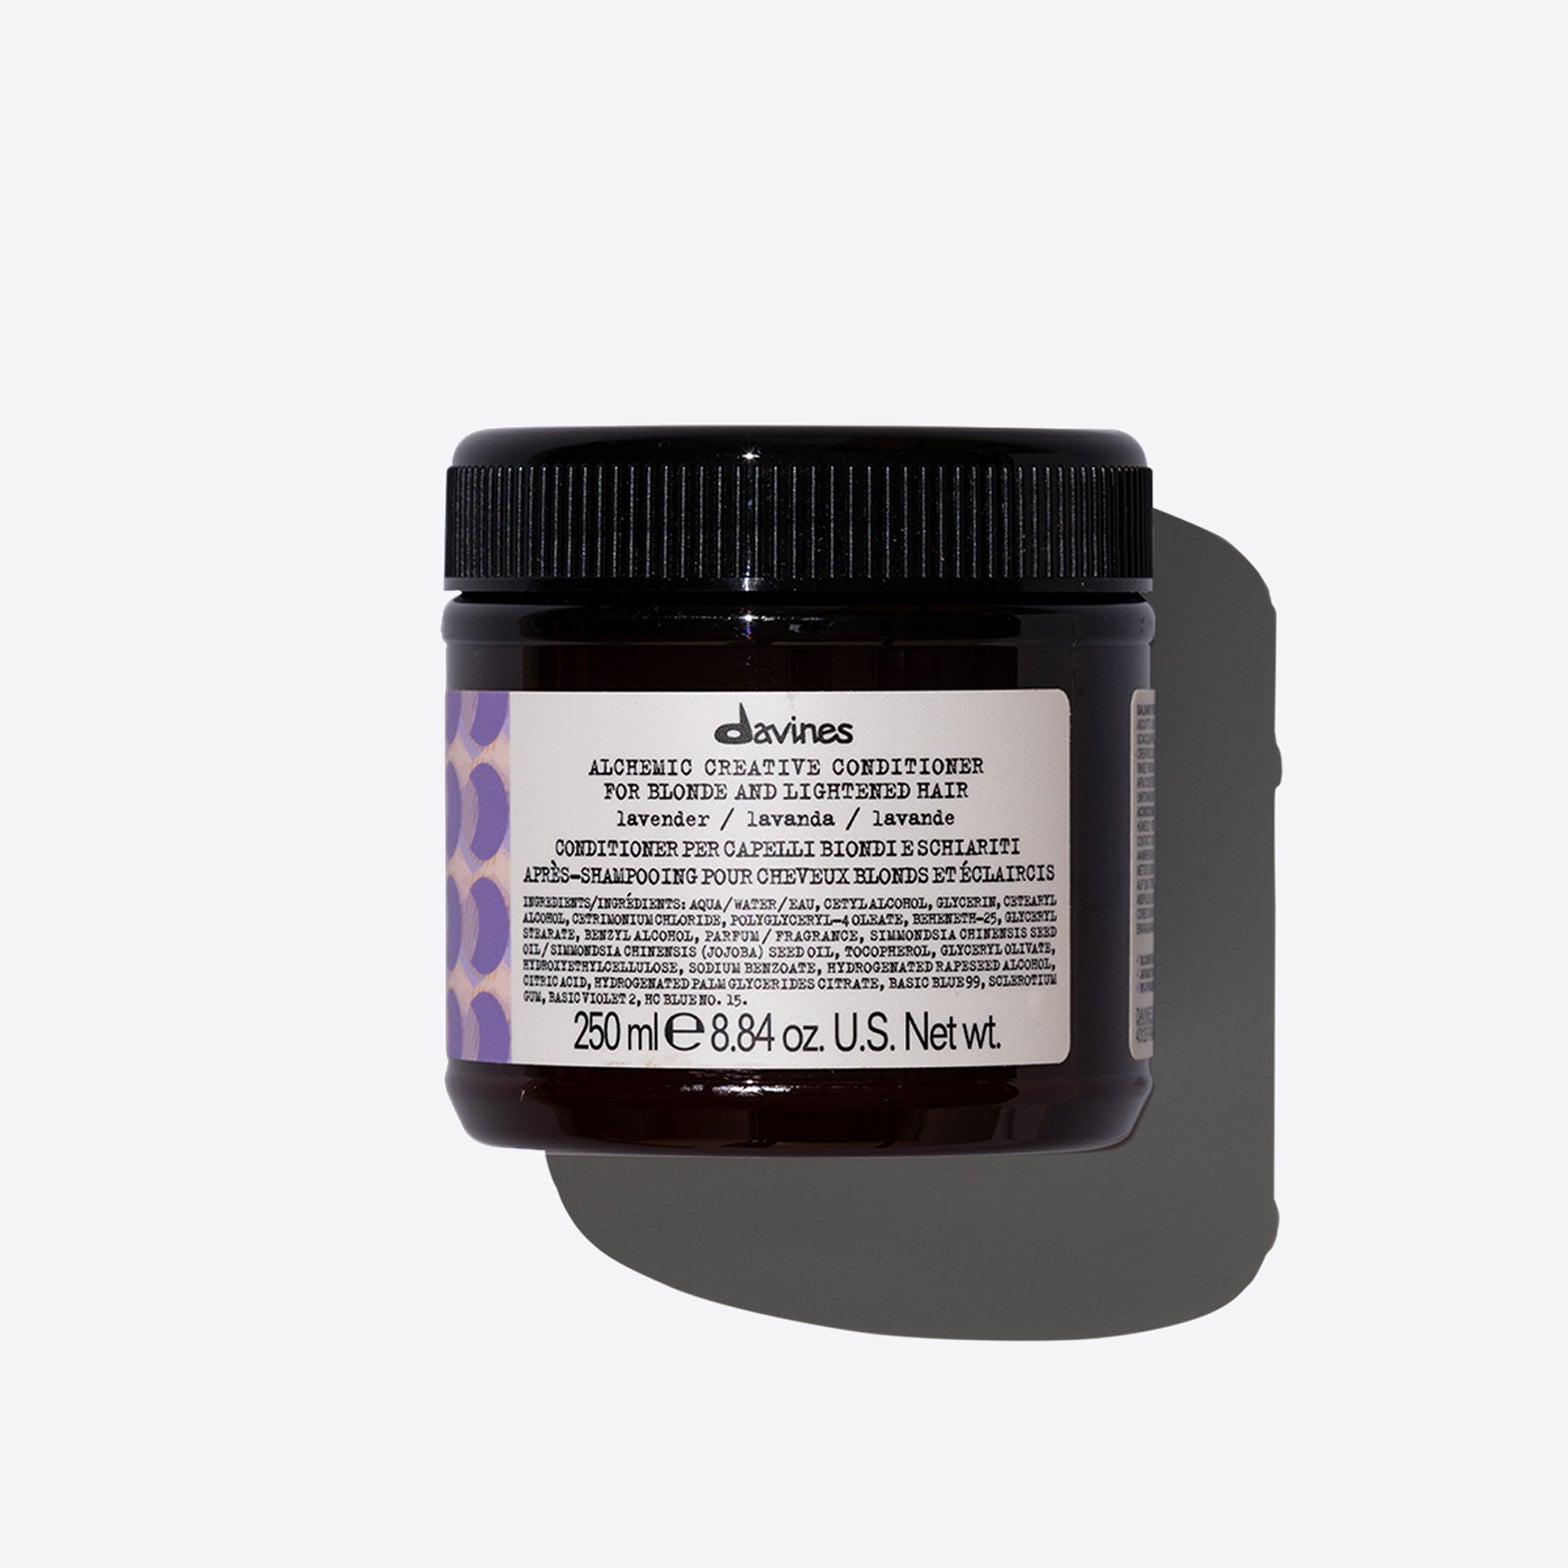 ALCHEMIC Creative Conditioner Lavender 1  Davines
